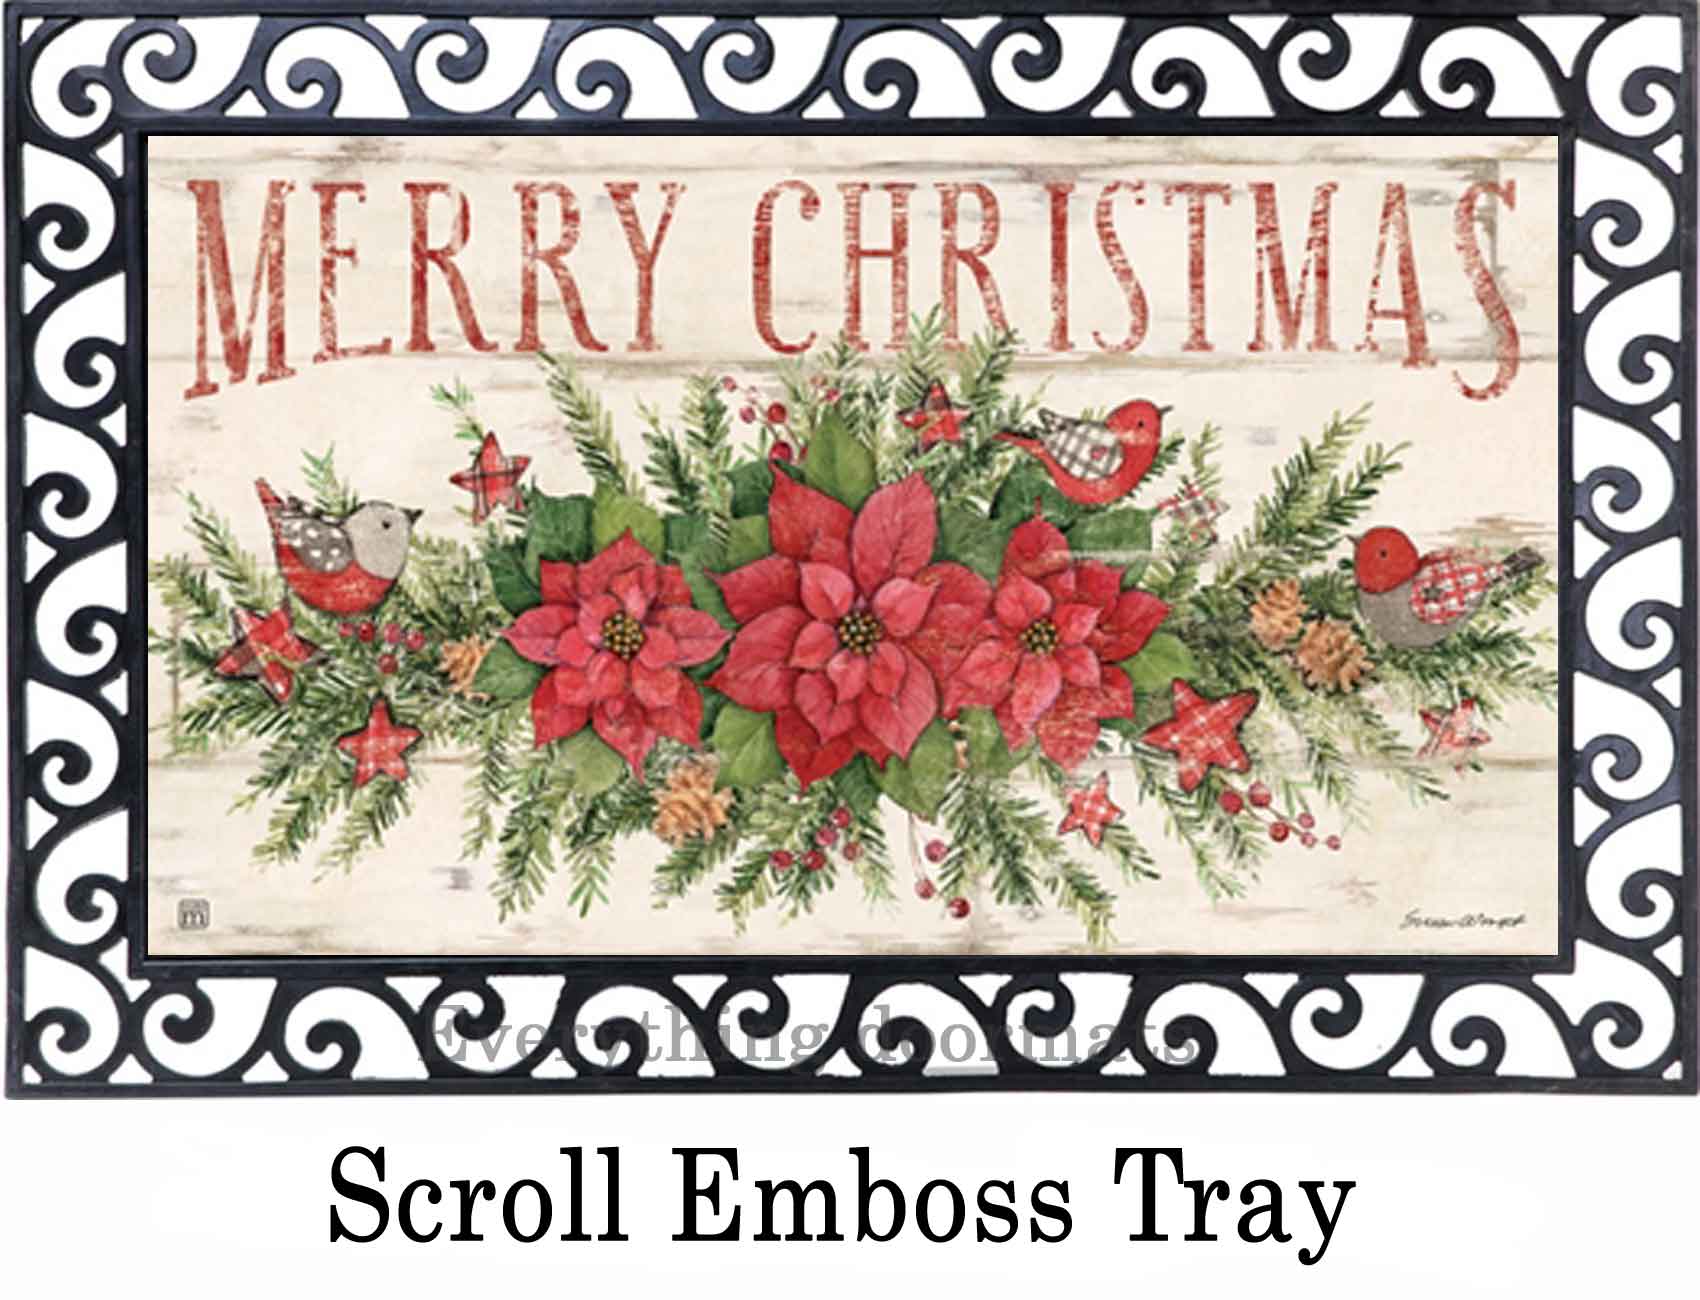 https://www.everythingdoormats.com/images/products/farmhouse-christmas-matmates-insert-doormat-in-outdoor-scroll-emboss-doormat-tray.jpg